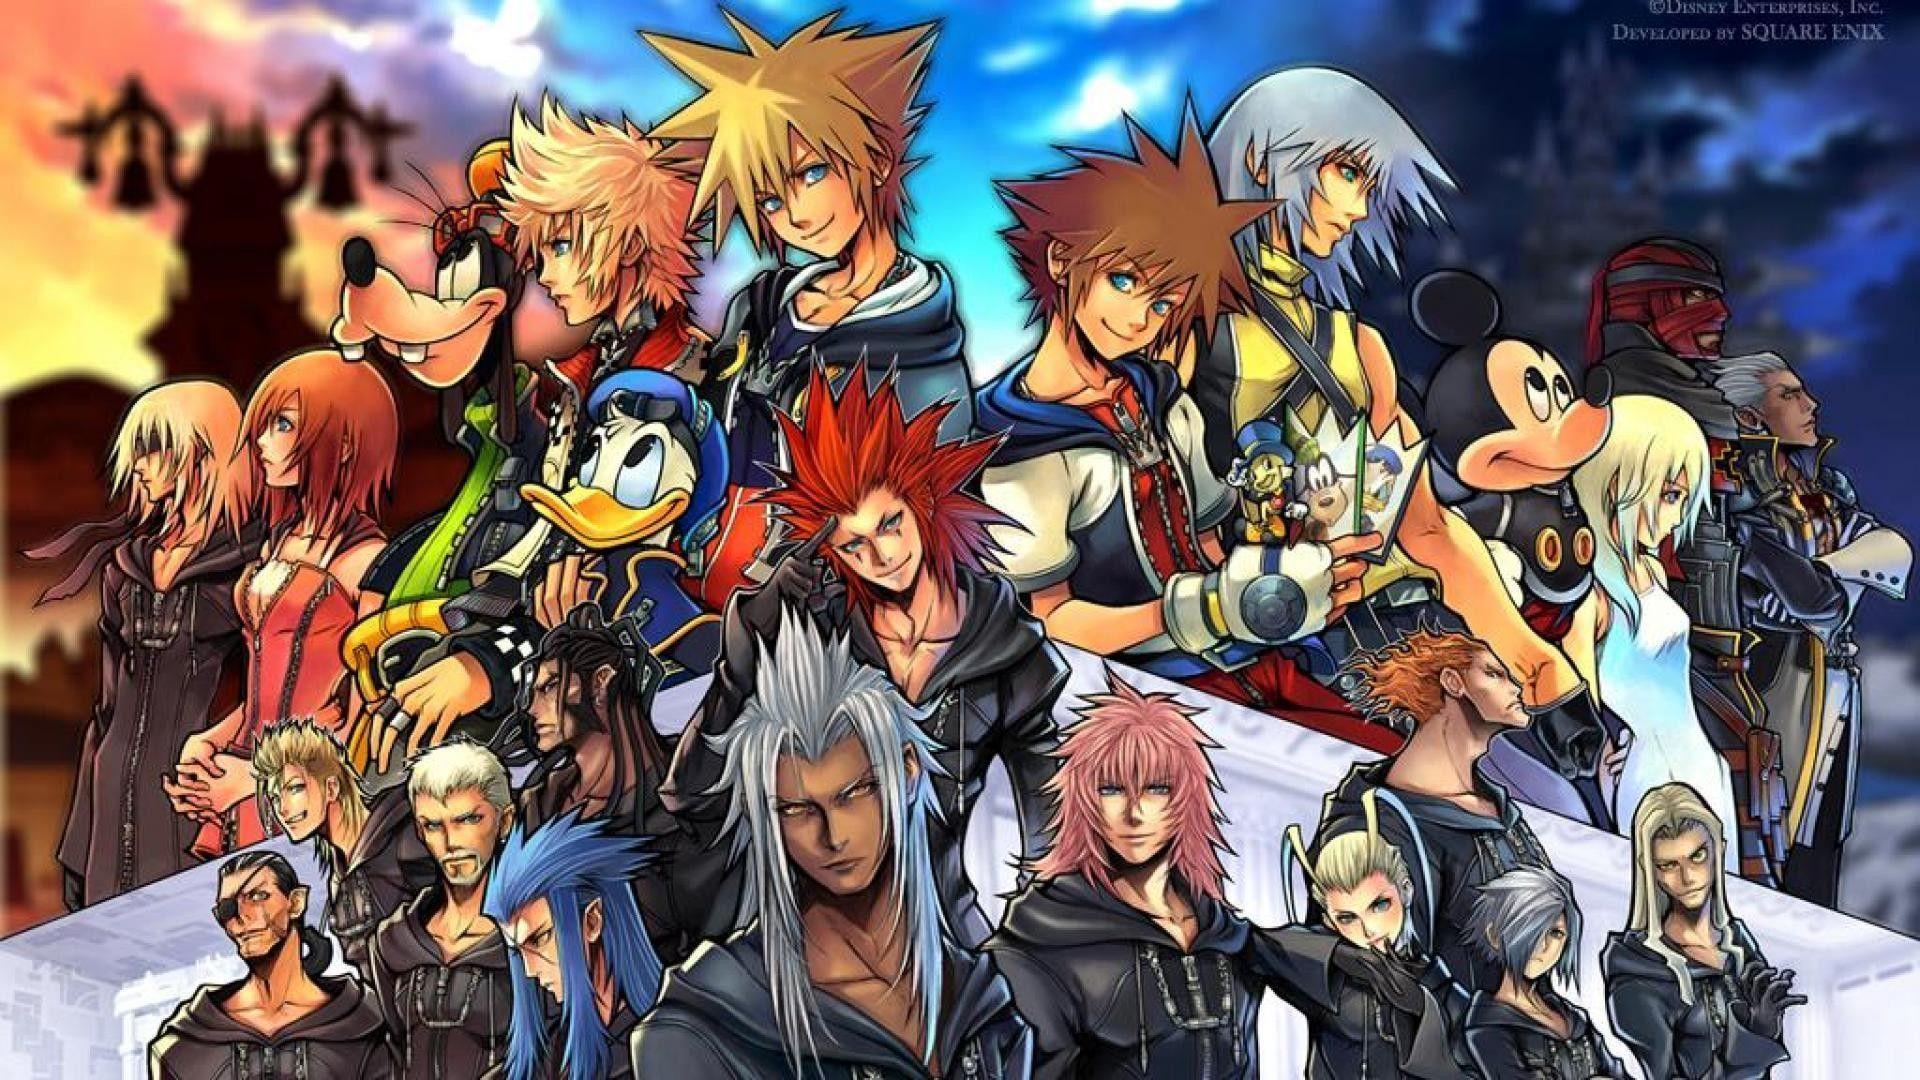 Kingdom Hearts 2 Wallpaper